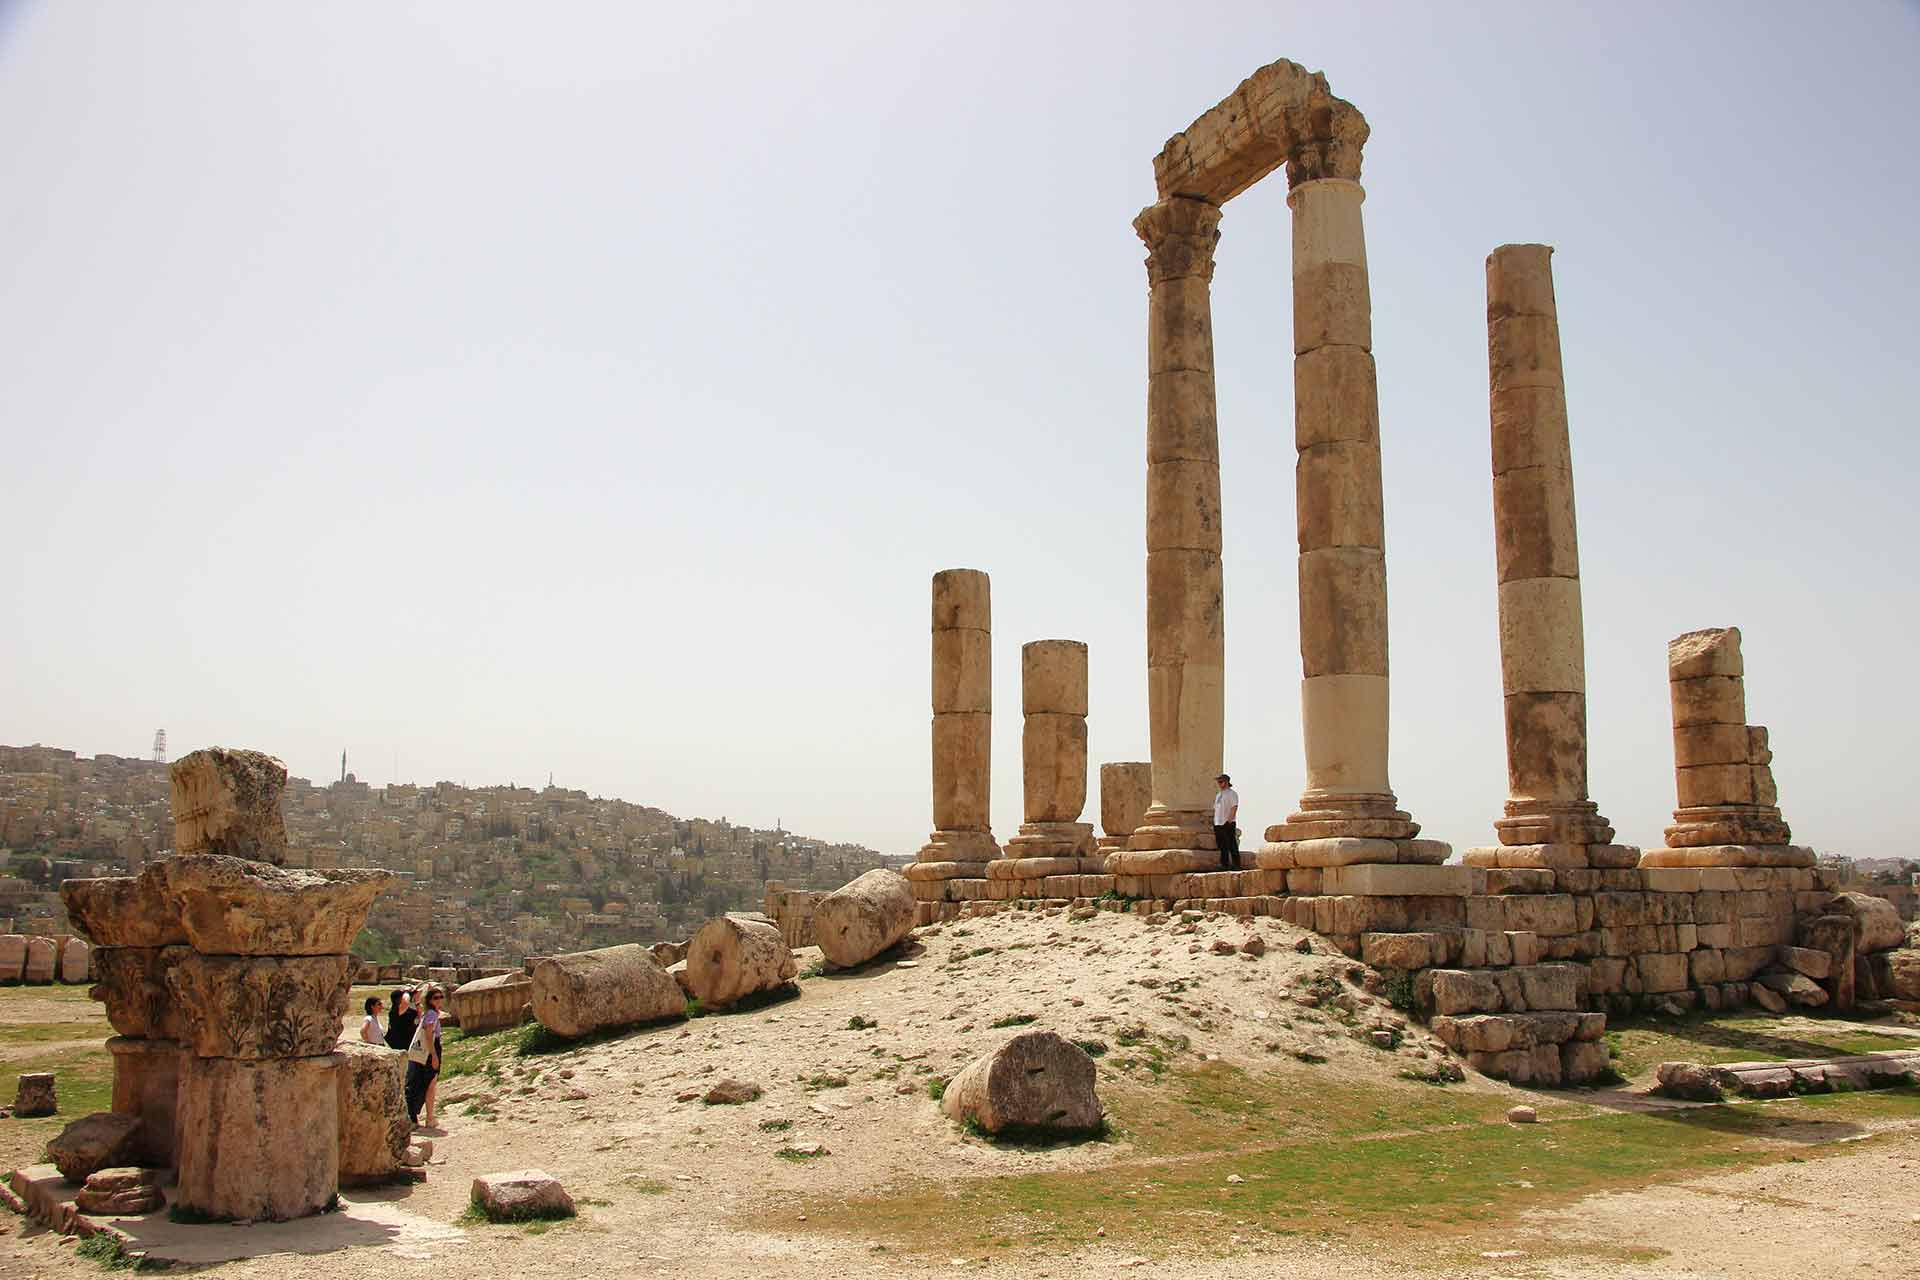 Ruins of the Roman Temple of Hercules, found at Amman’s Citadel